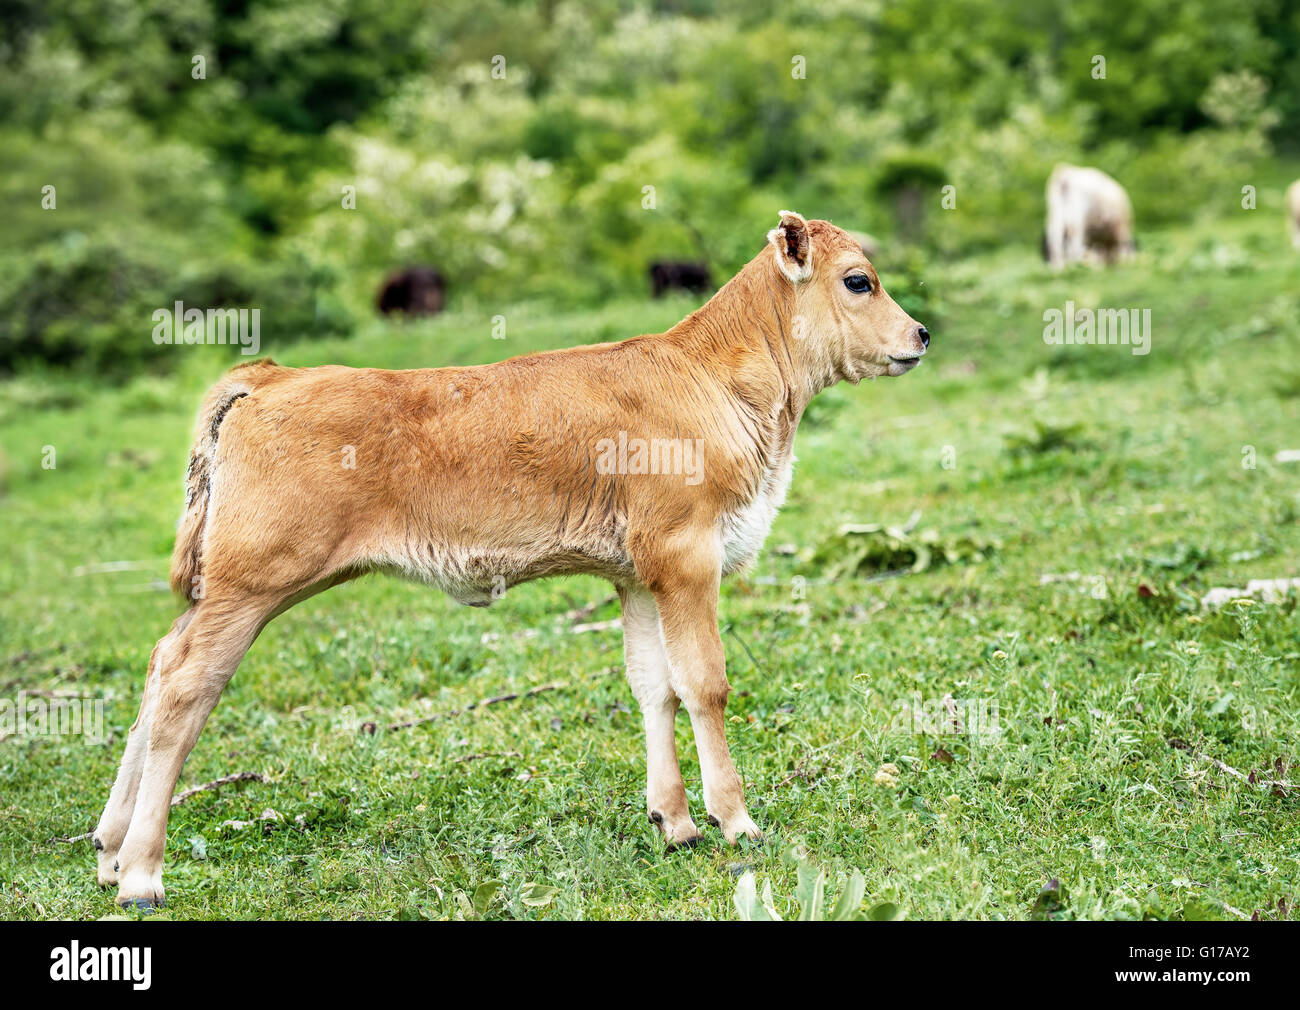 Pretty little calf standing alone in green pasture. Stock Photo